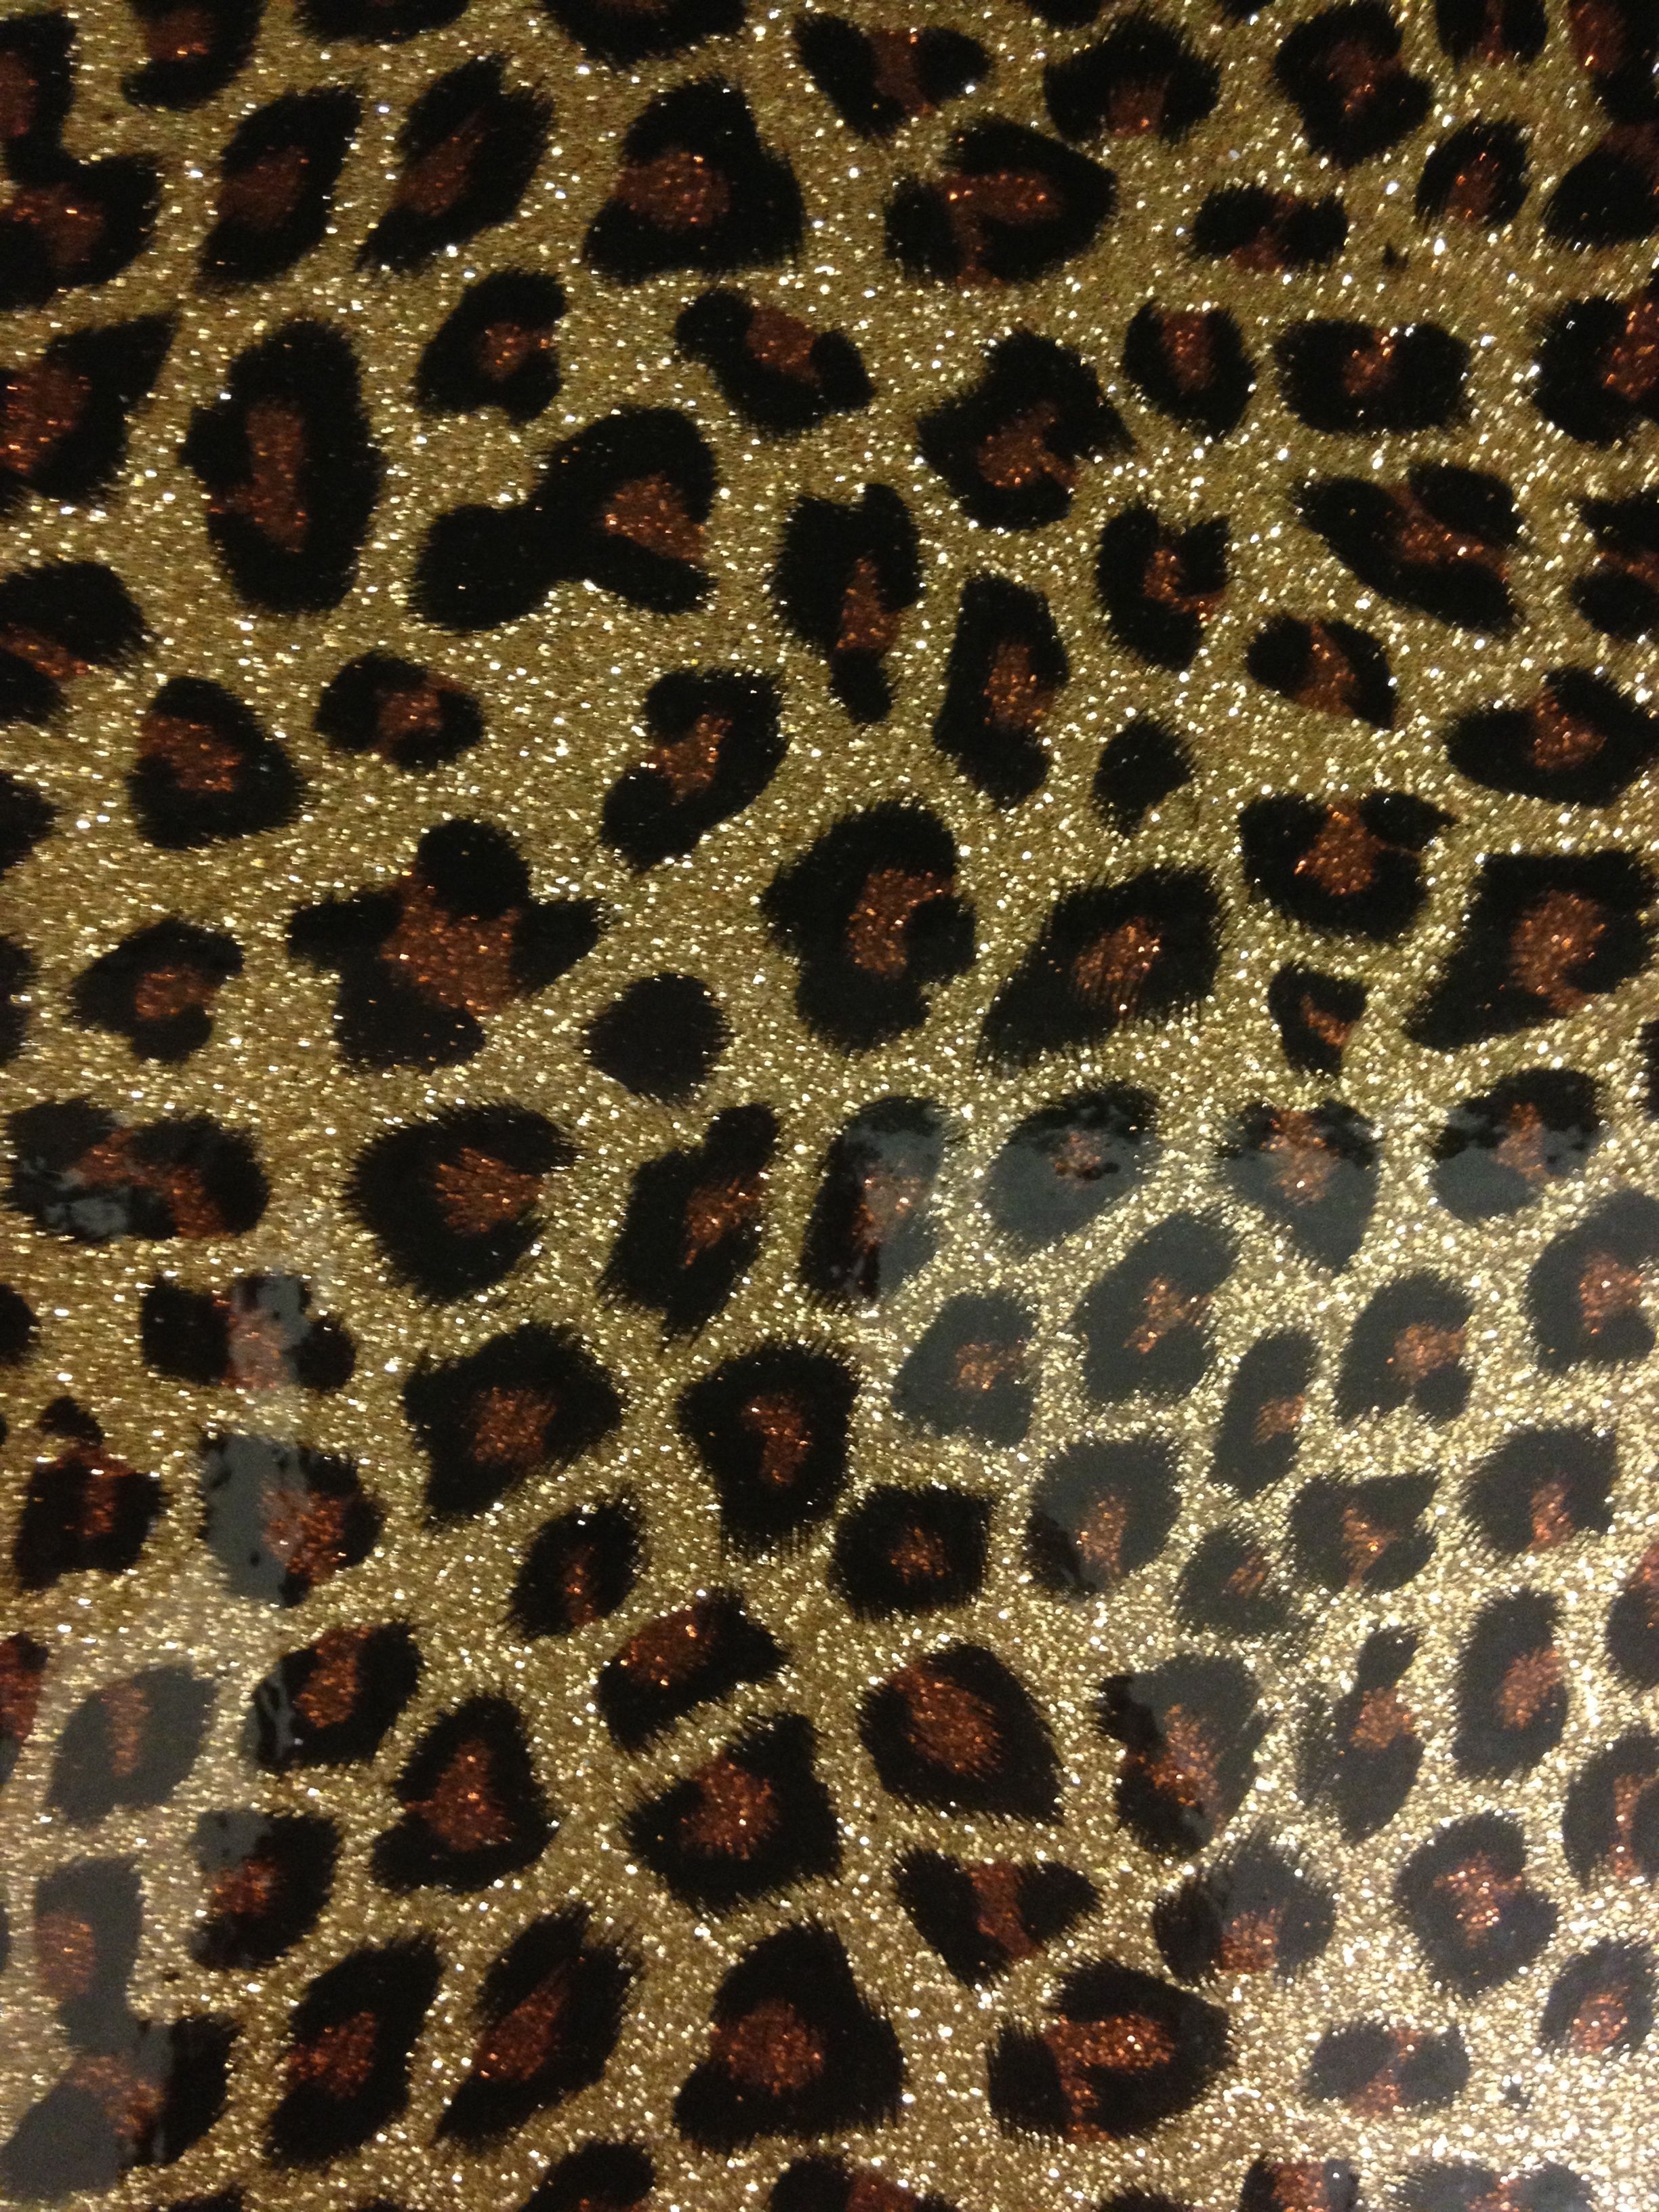 black, brown, gold, leopard print, glitter.